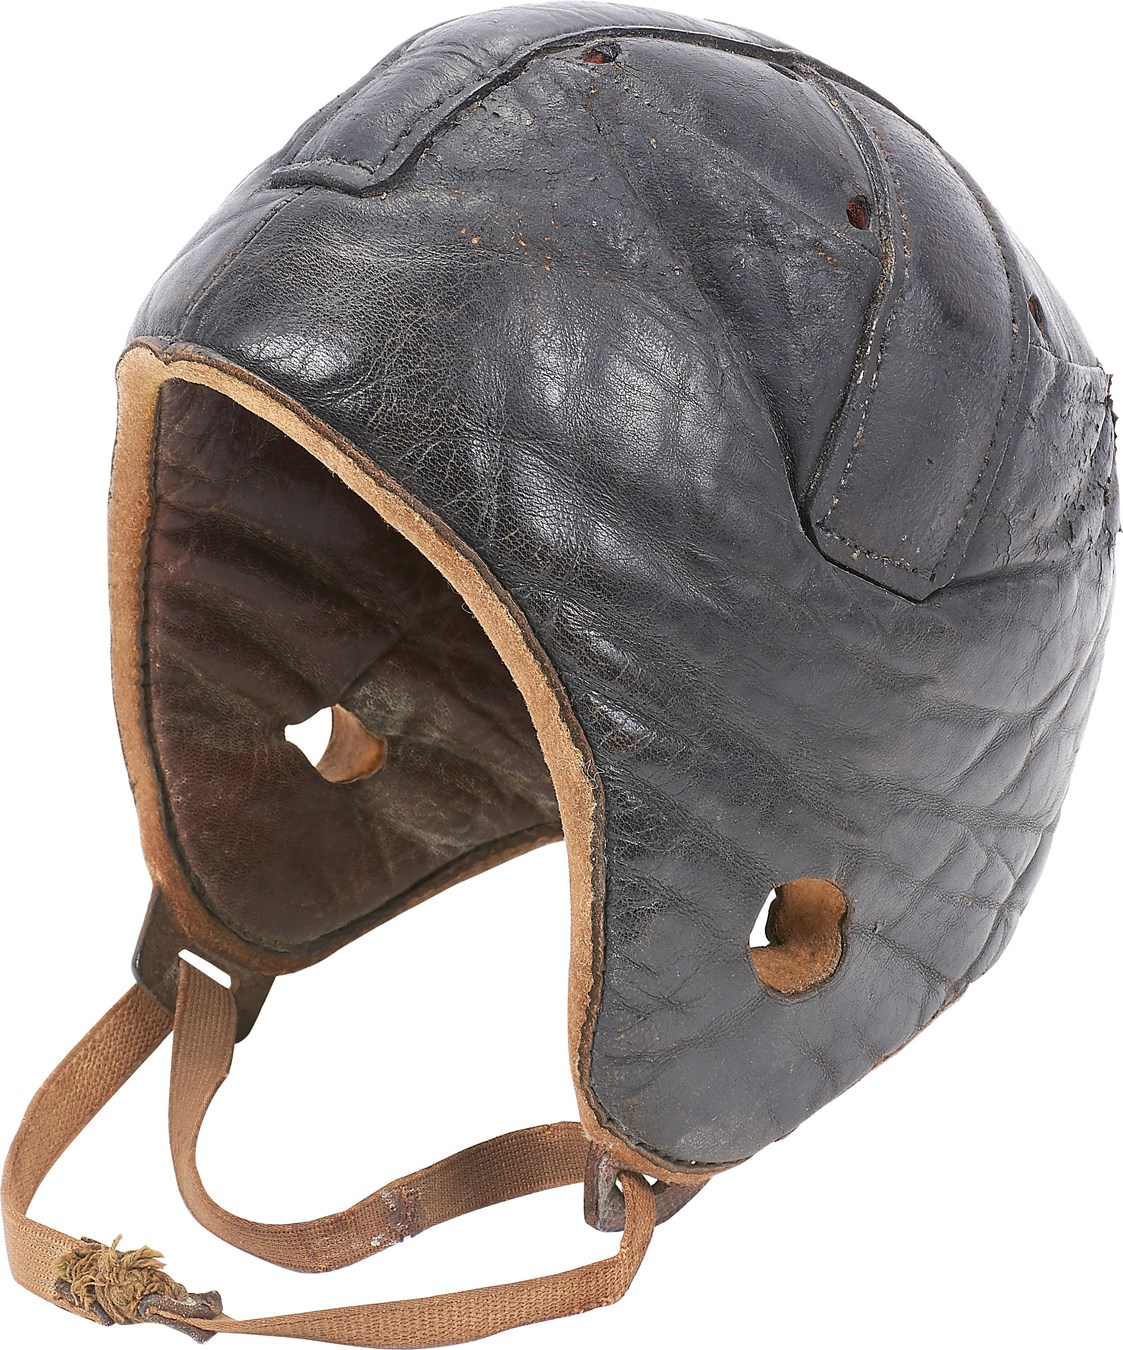 Antique Sporting Goods - Early Harvard Style Football Helmet